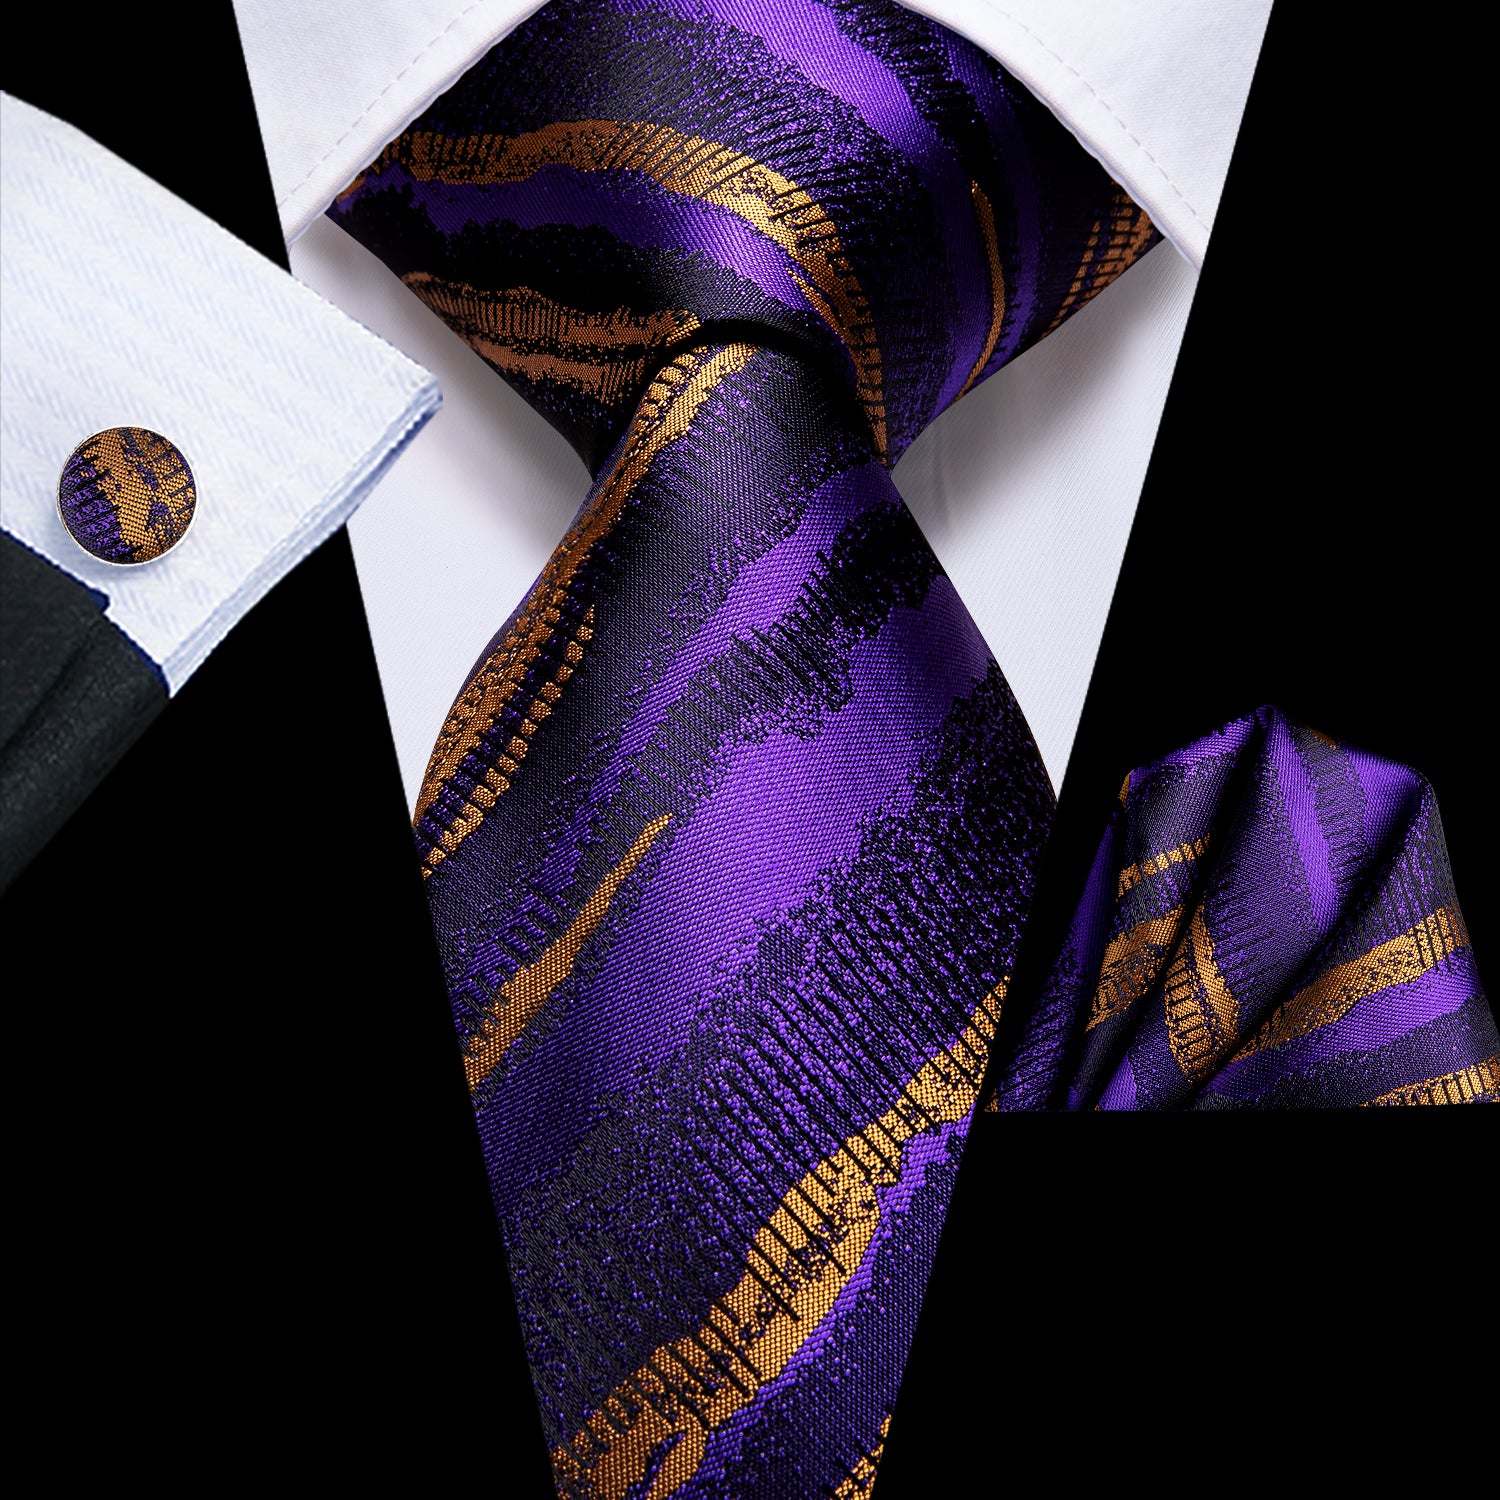 Purple Goldenrod Stiped Tie Pocket Square Cufflinks Set